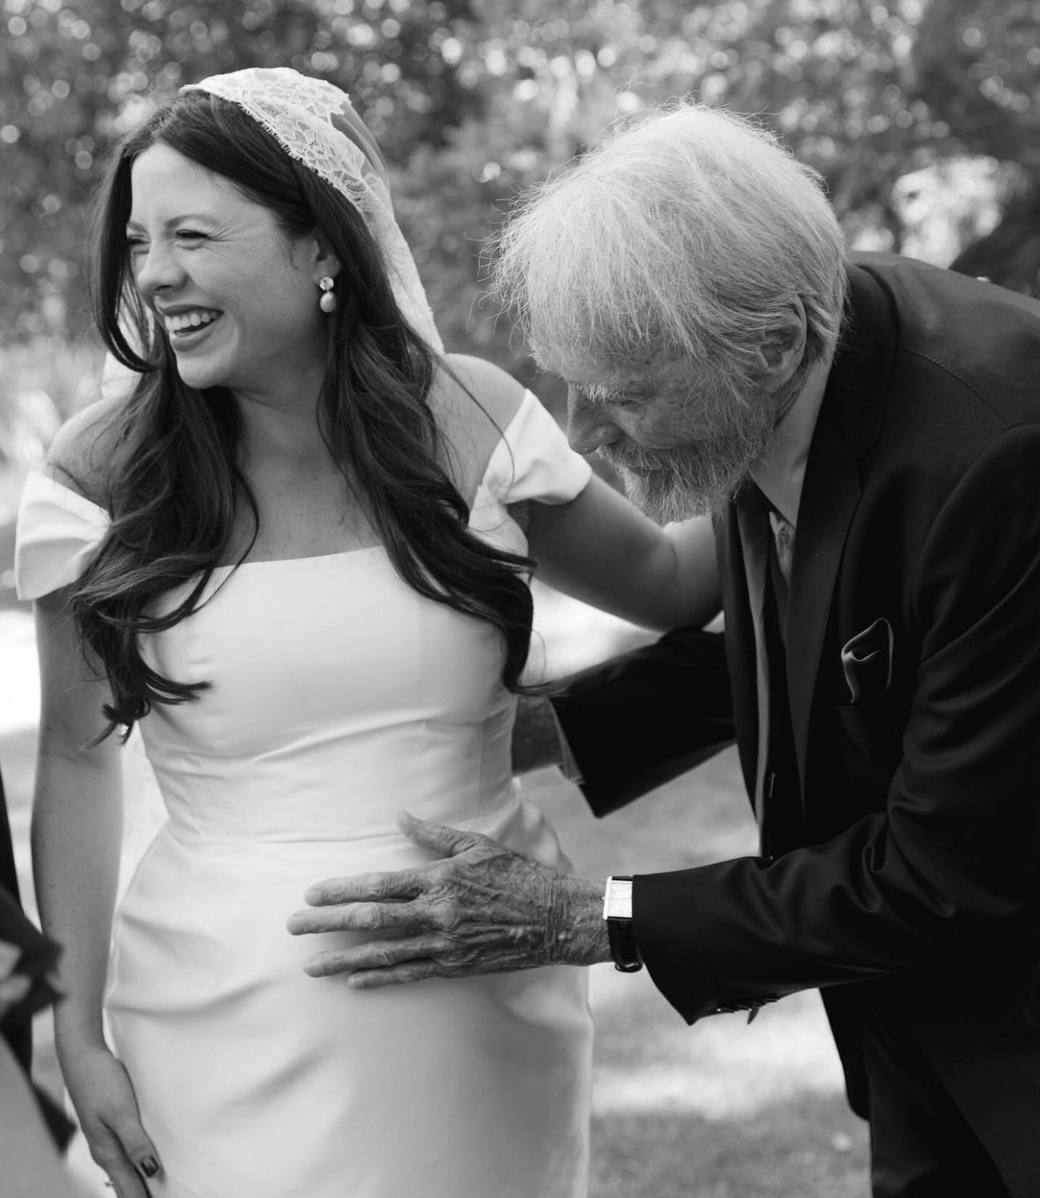 94-летний Клинт Иствуд выдал замуж самую младшую дочь